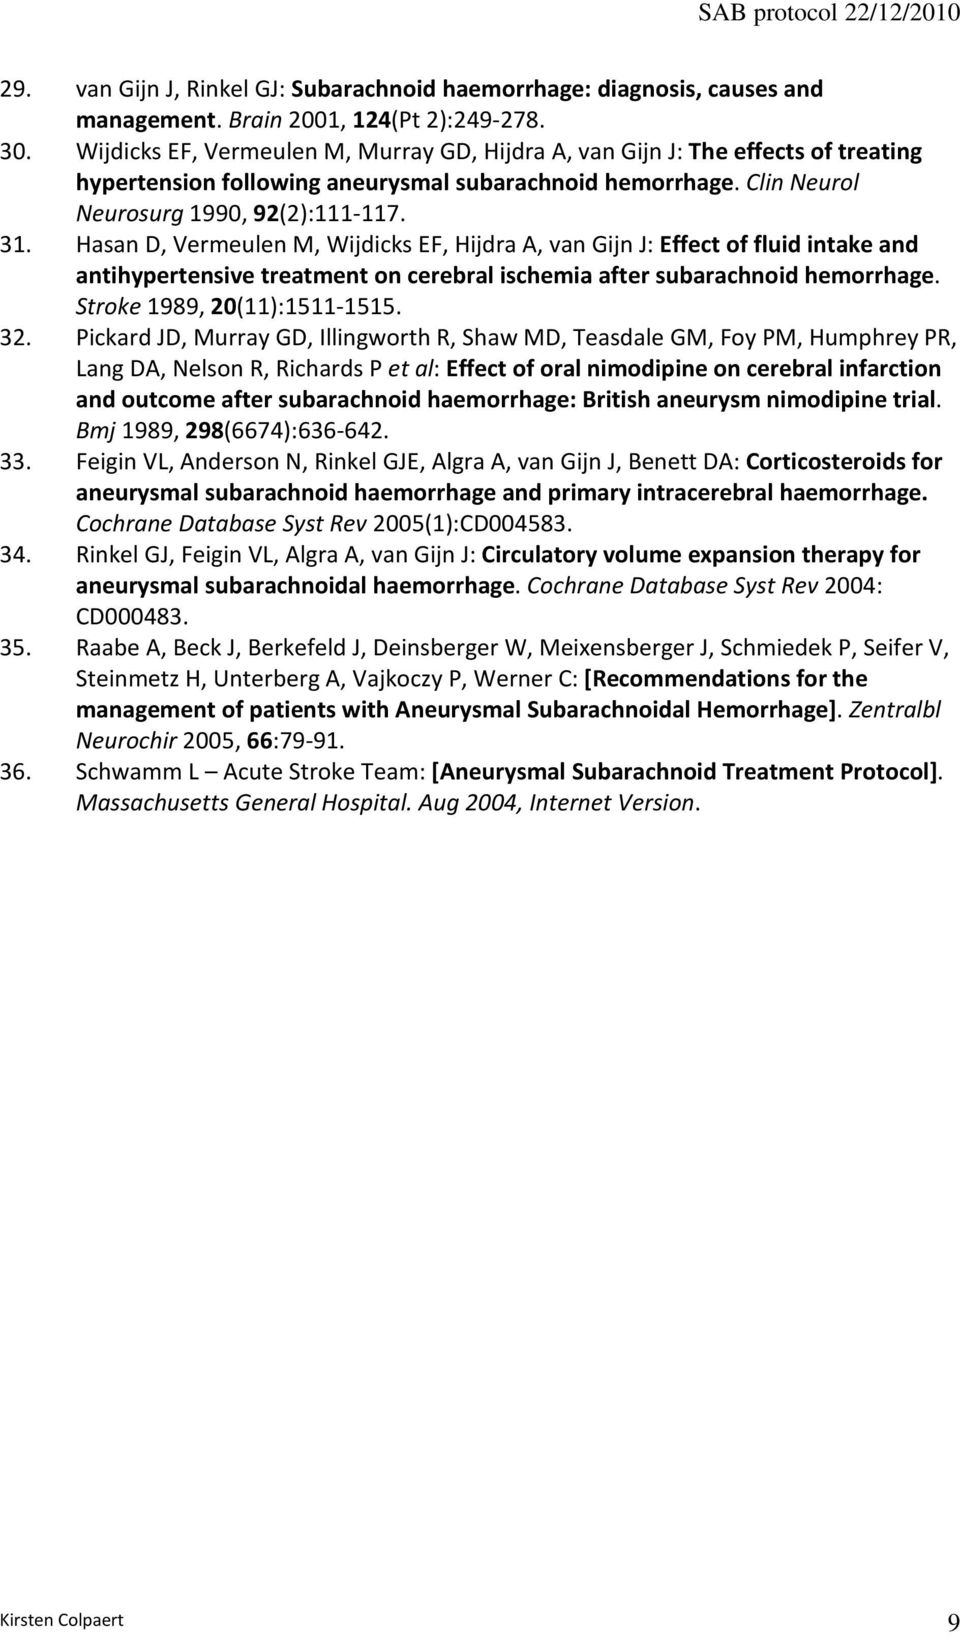 Hasan D, Vermeulen M, Wijdicks EF, Hijdra A, van Gijn J: Effect of fluid intake and antihypertensive treatment on cerebral ischemia after subarachnoid hemorrhage. Stroke 1989, 20(11):1511-1515. 32.